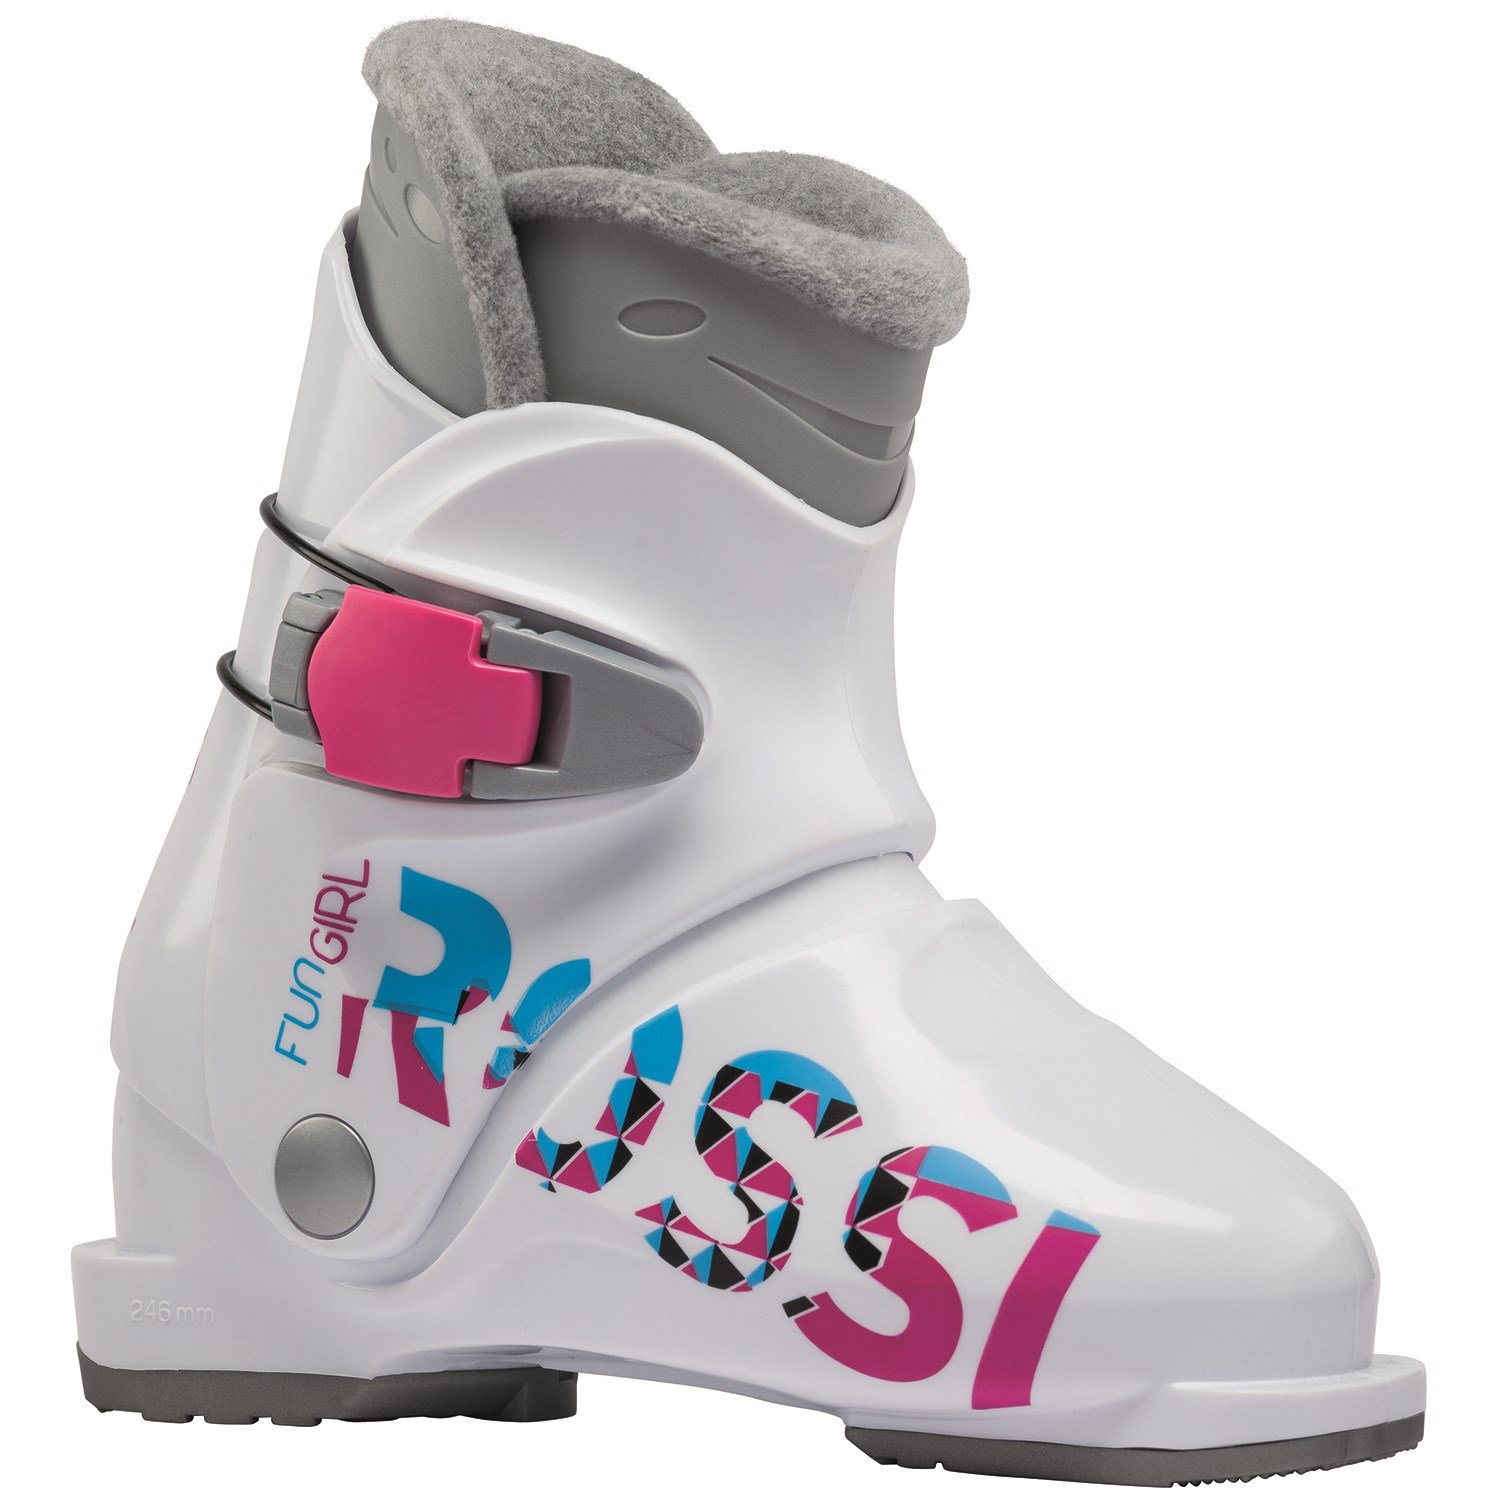 Rossignol Fun Girl J1 Ski Boots Girls